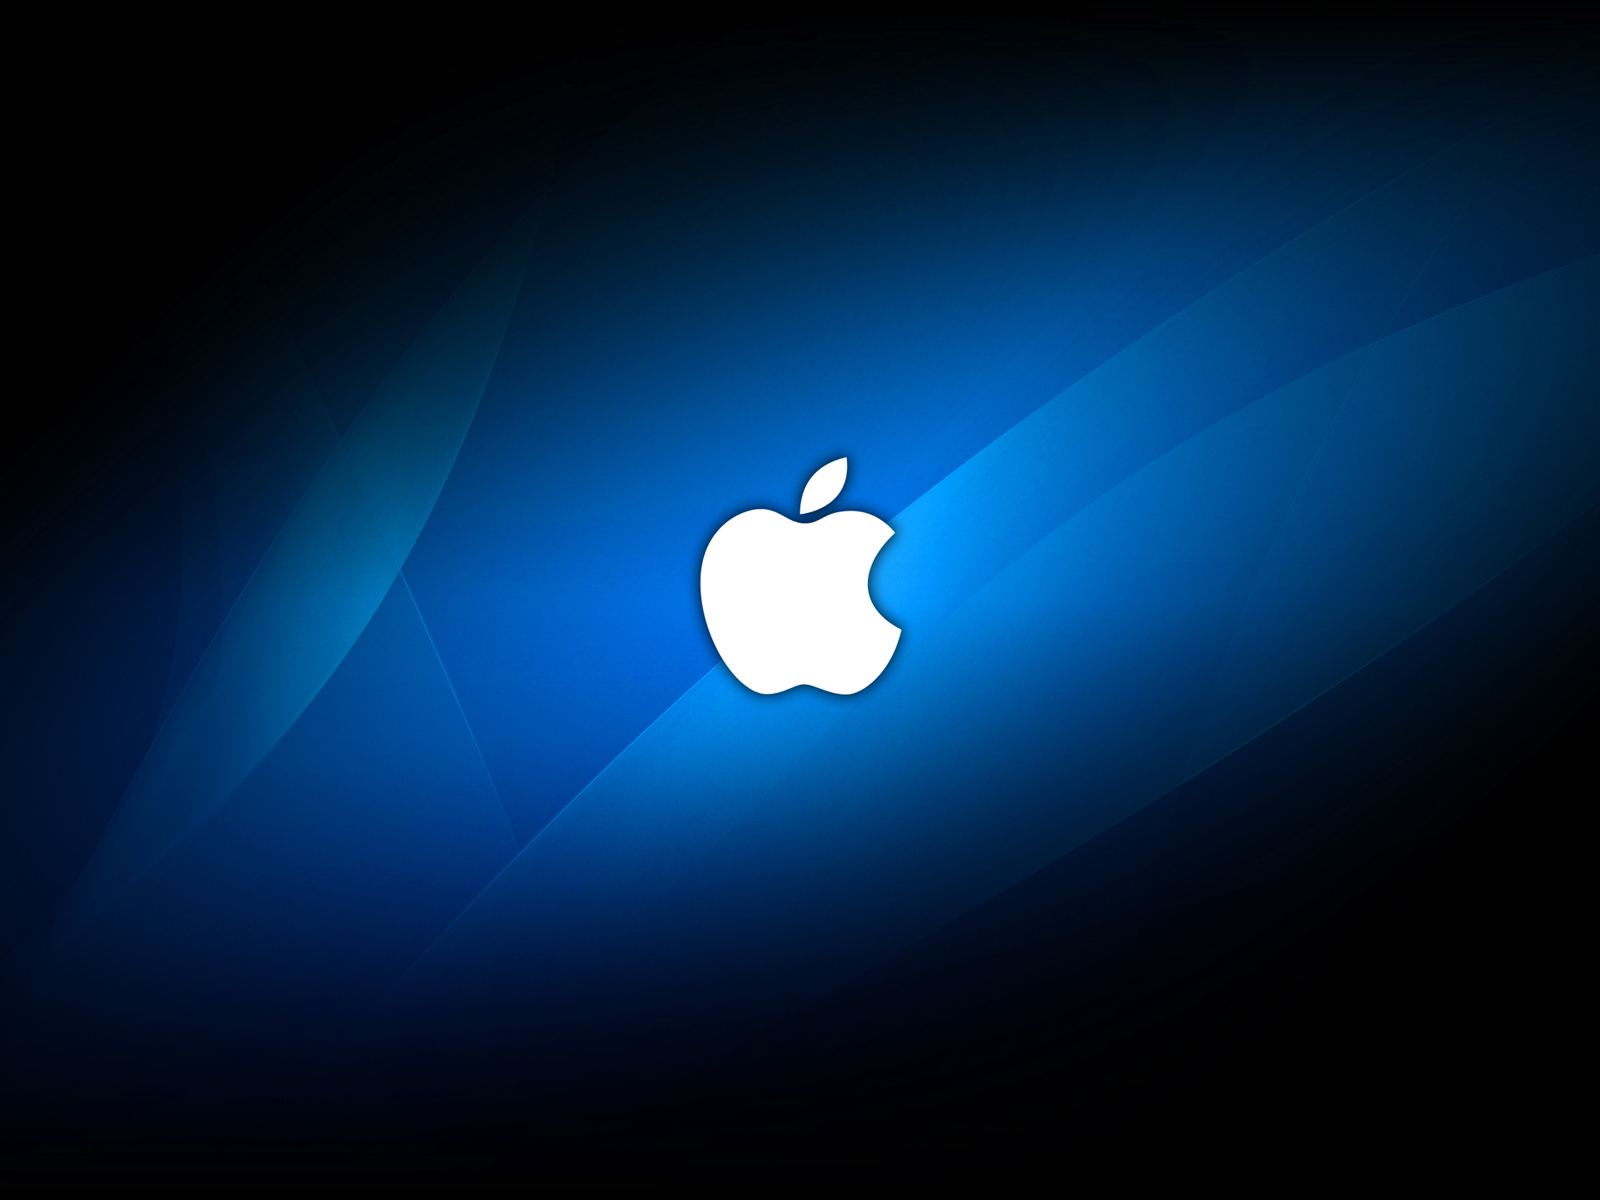 iphone logo wallpaper,azul,sistema operativo,cielo,atmósfera,tecnología